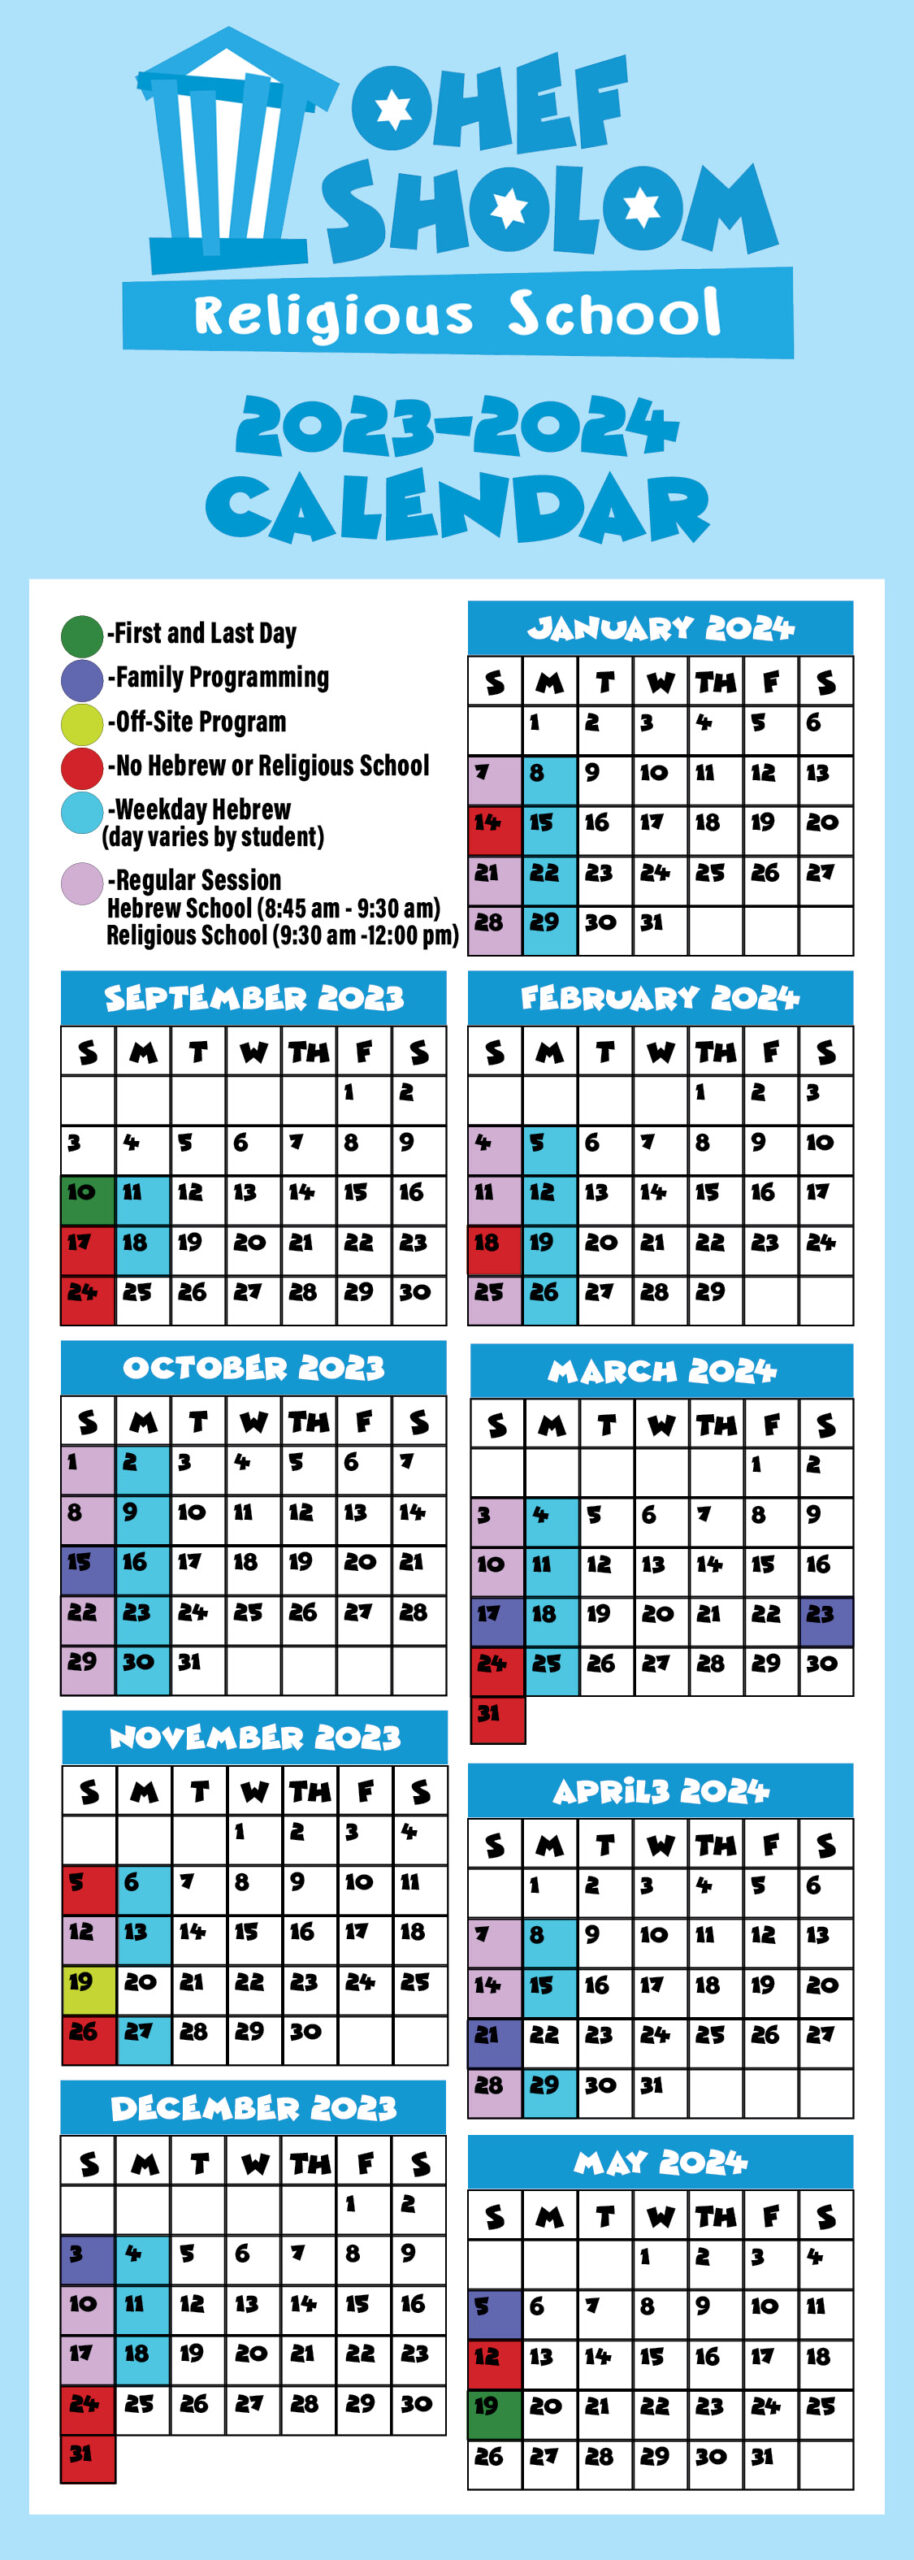 23-24 calendar pdf with times